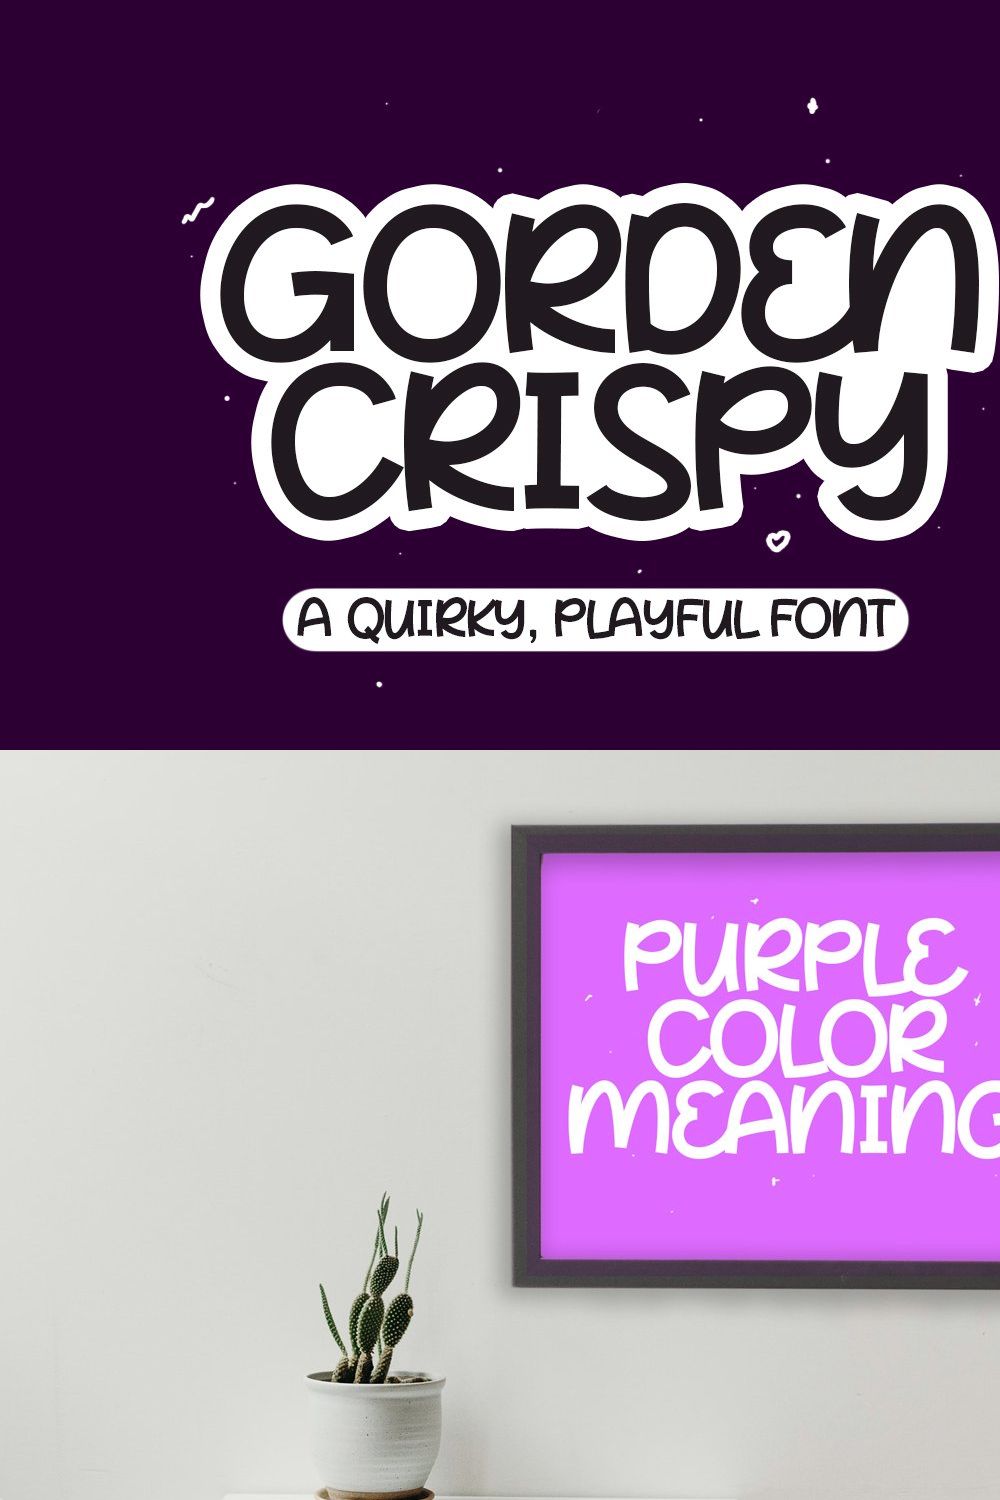 Gorden Crispy - Quirky Playful Font pinterest preview image.